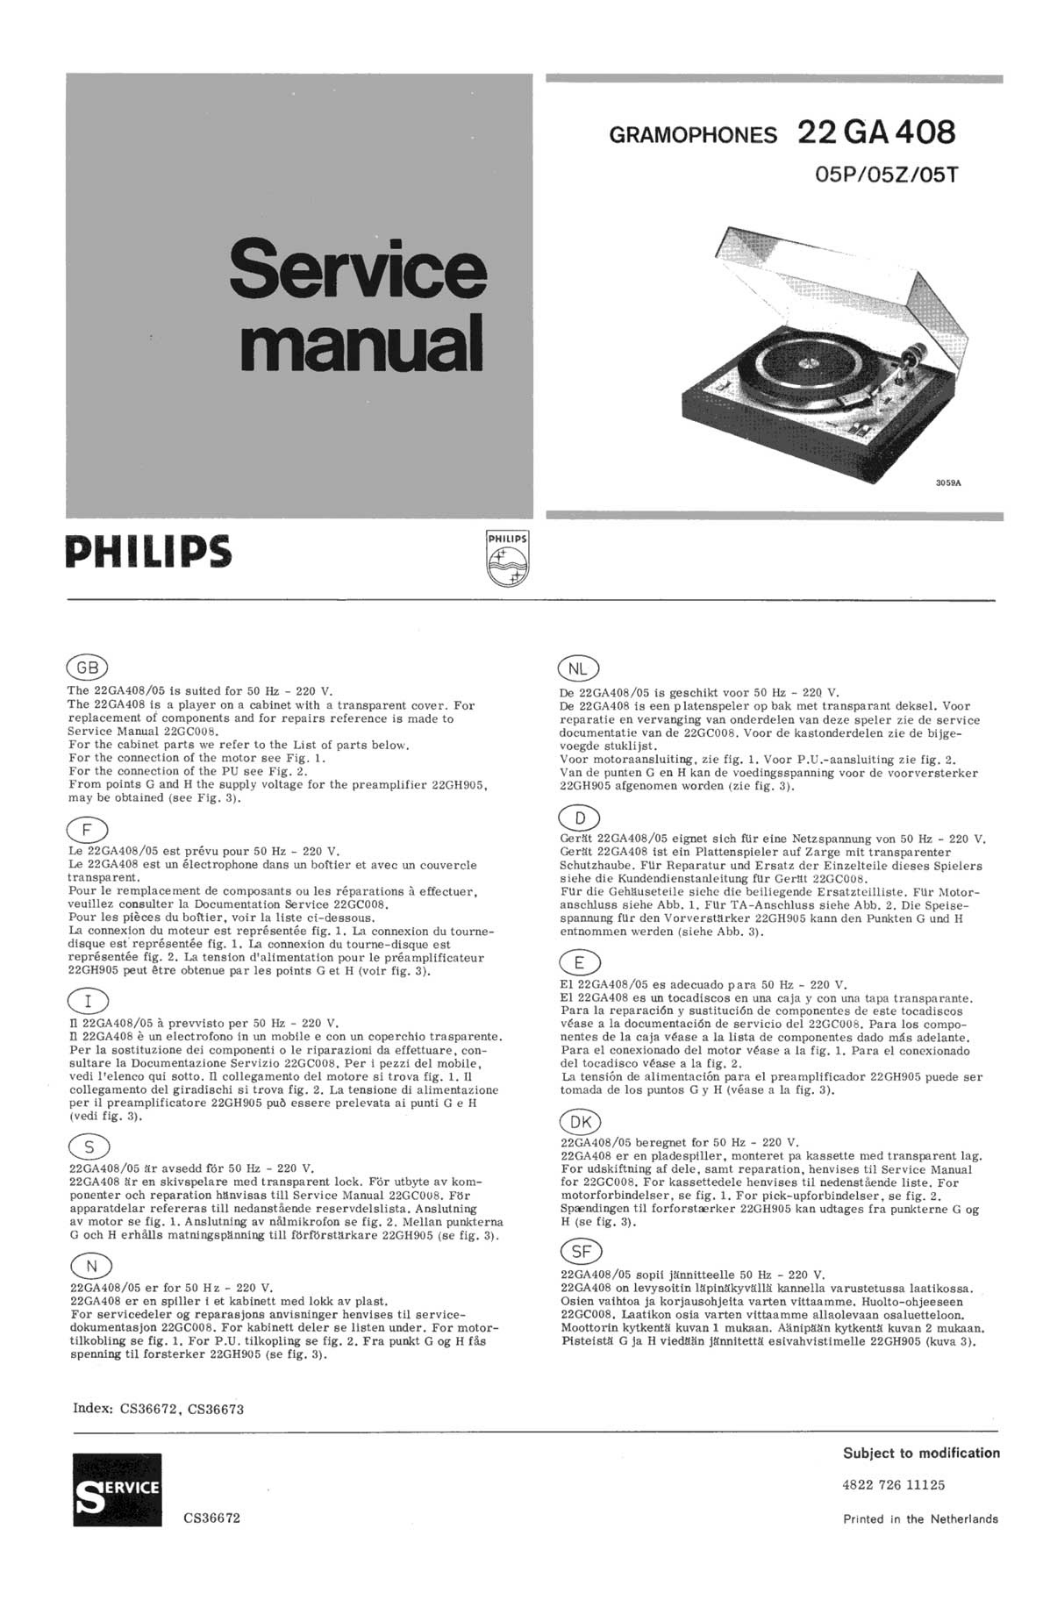 Philips GA-408 Service manual